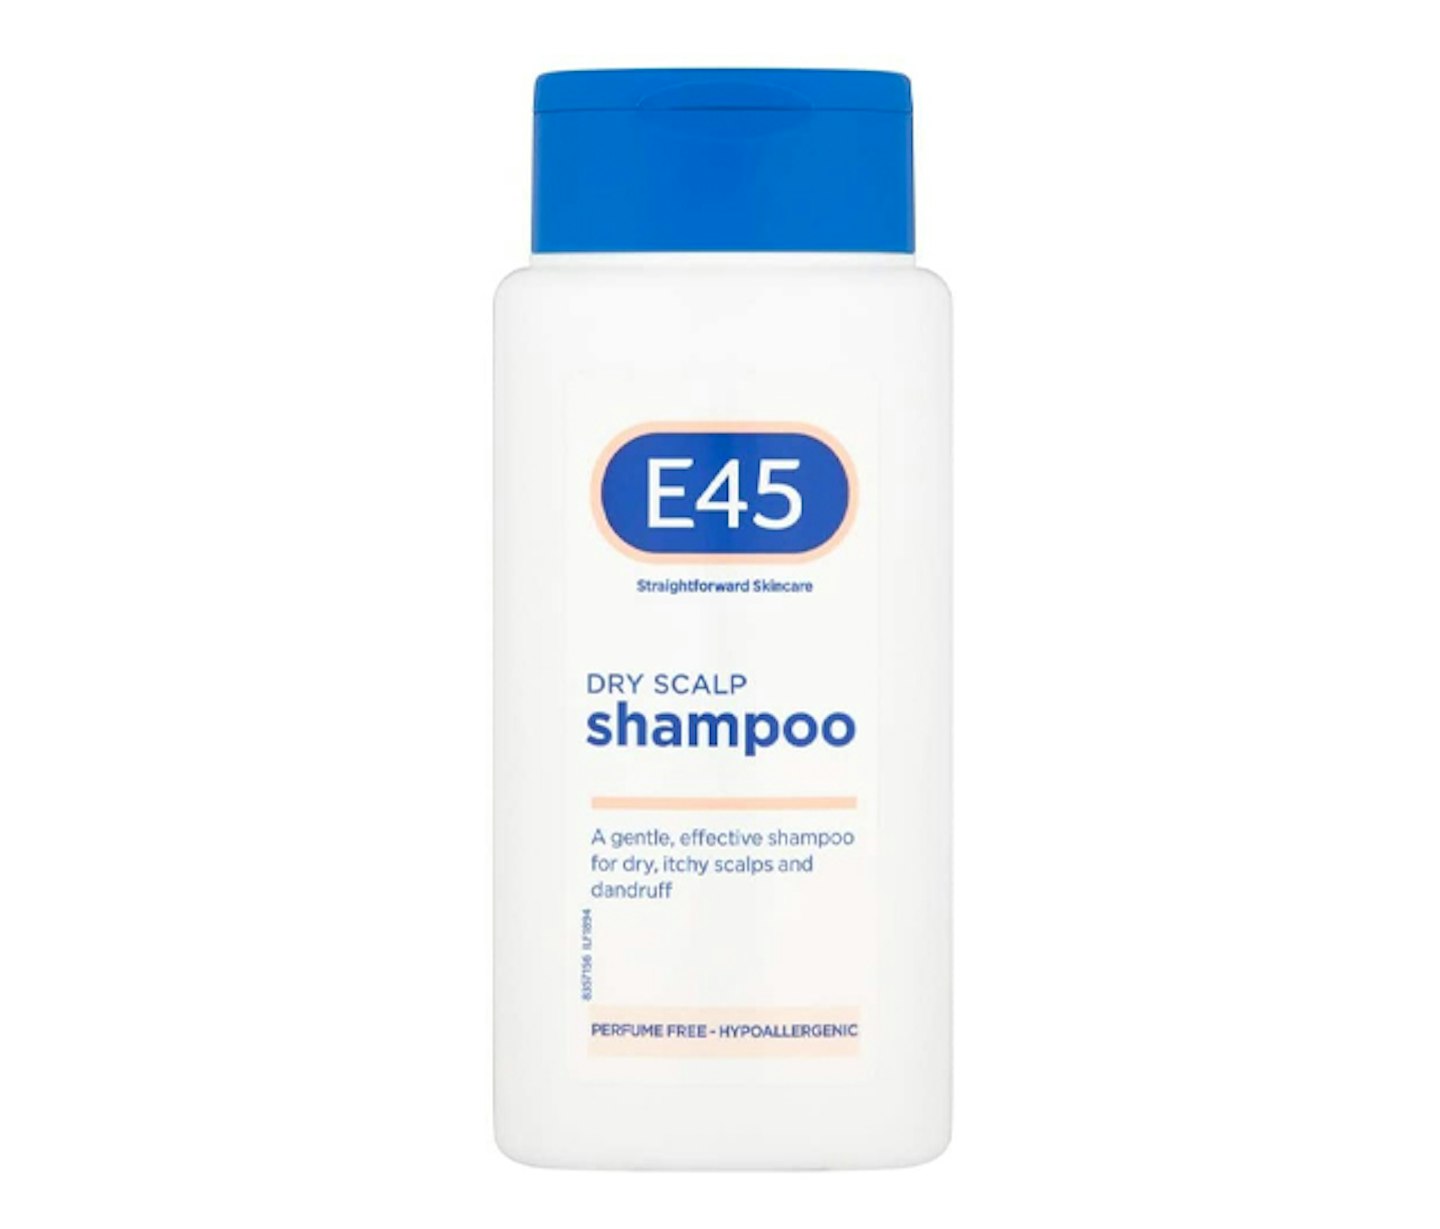 Dry scalp shampoo